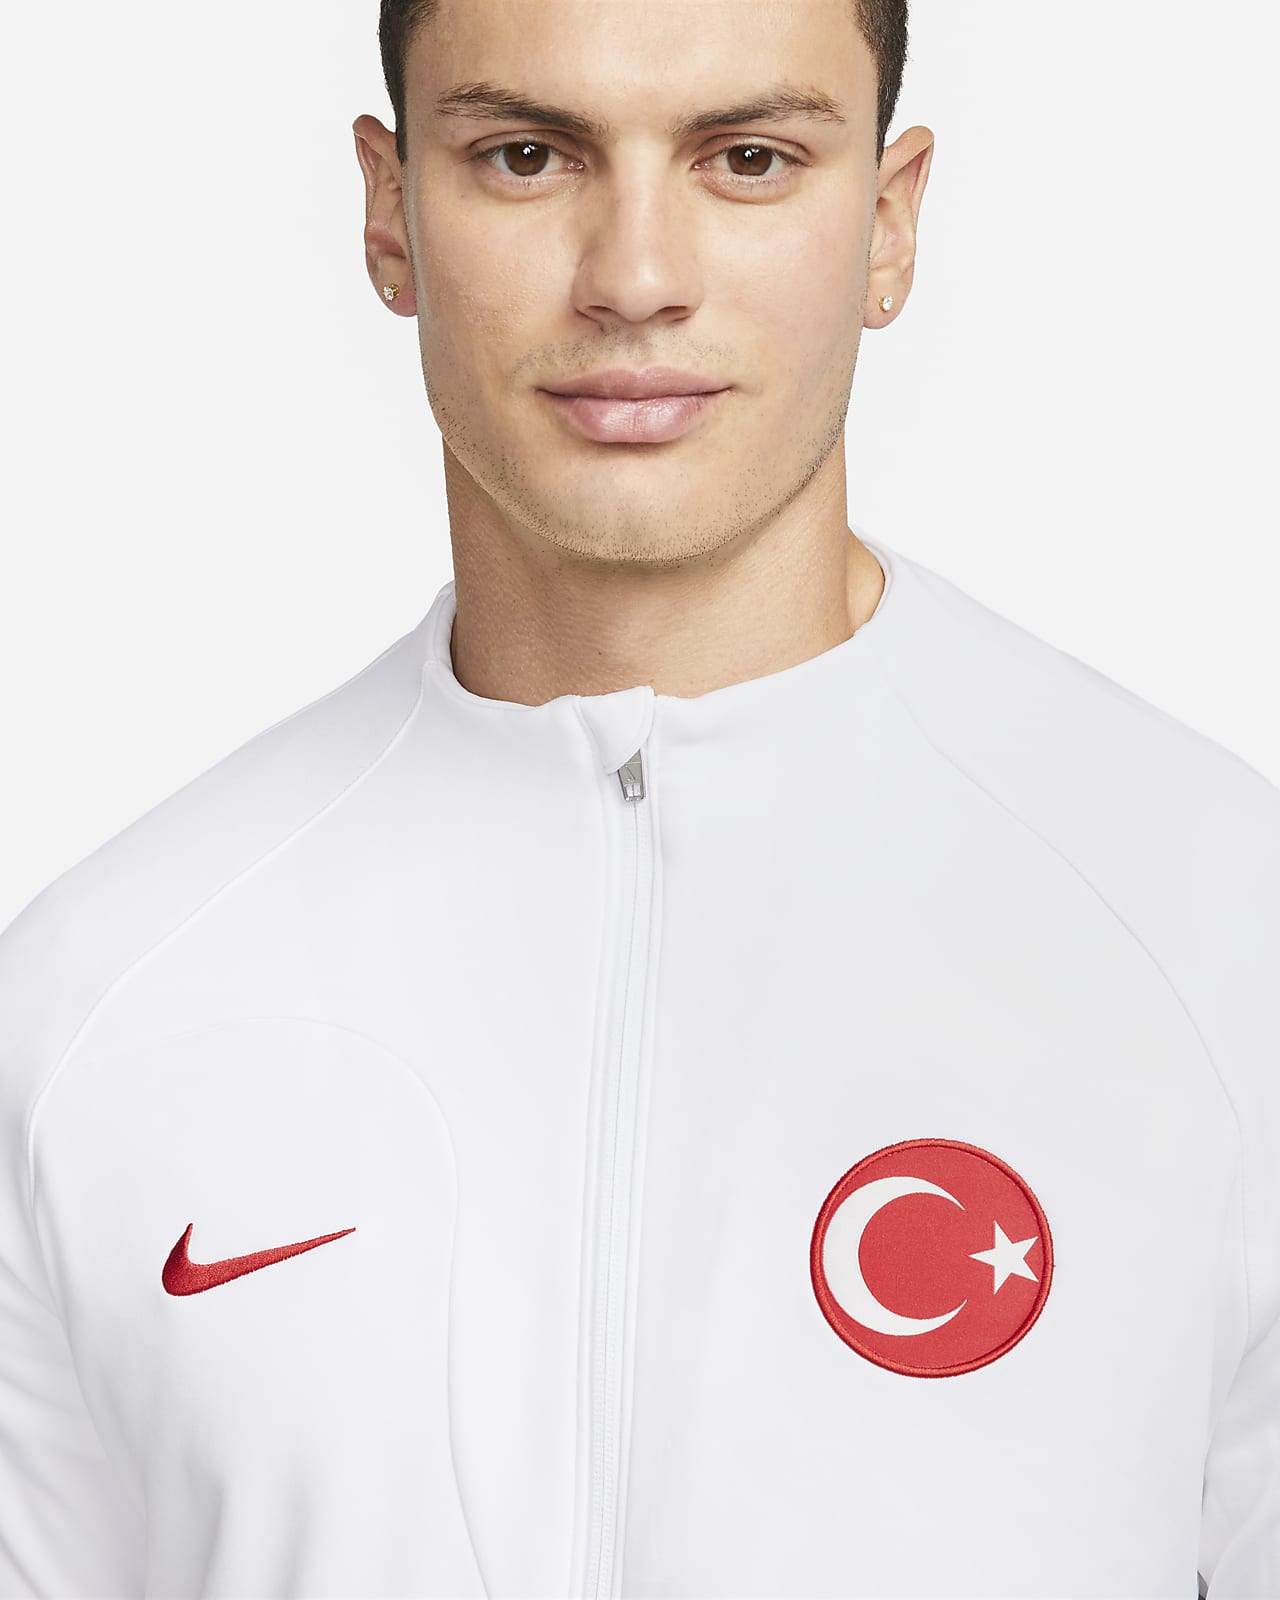 Sinds Een effectief Likken Türkiye Academy Pro Men's Knit Football Jacket. Nike LU